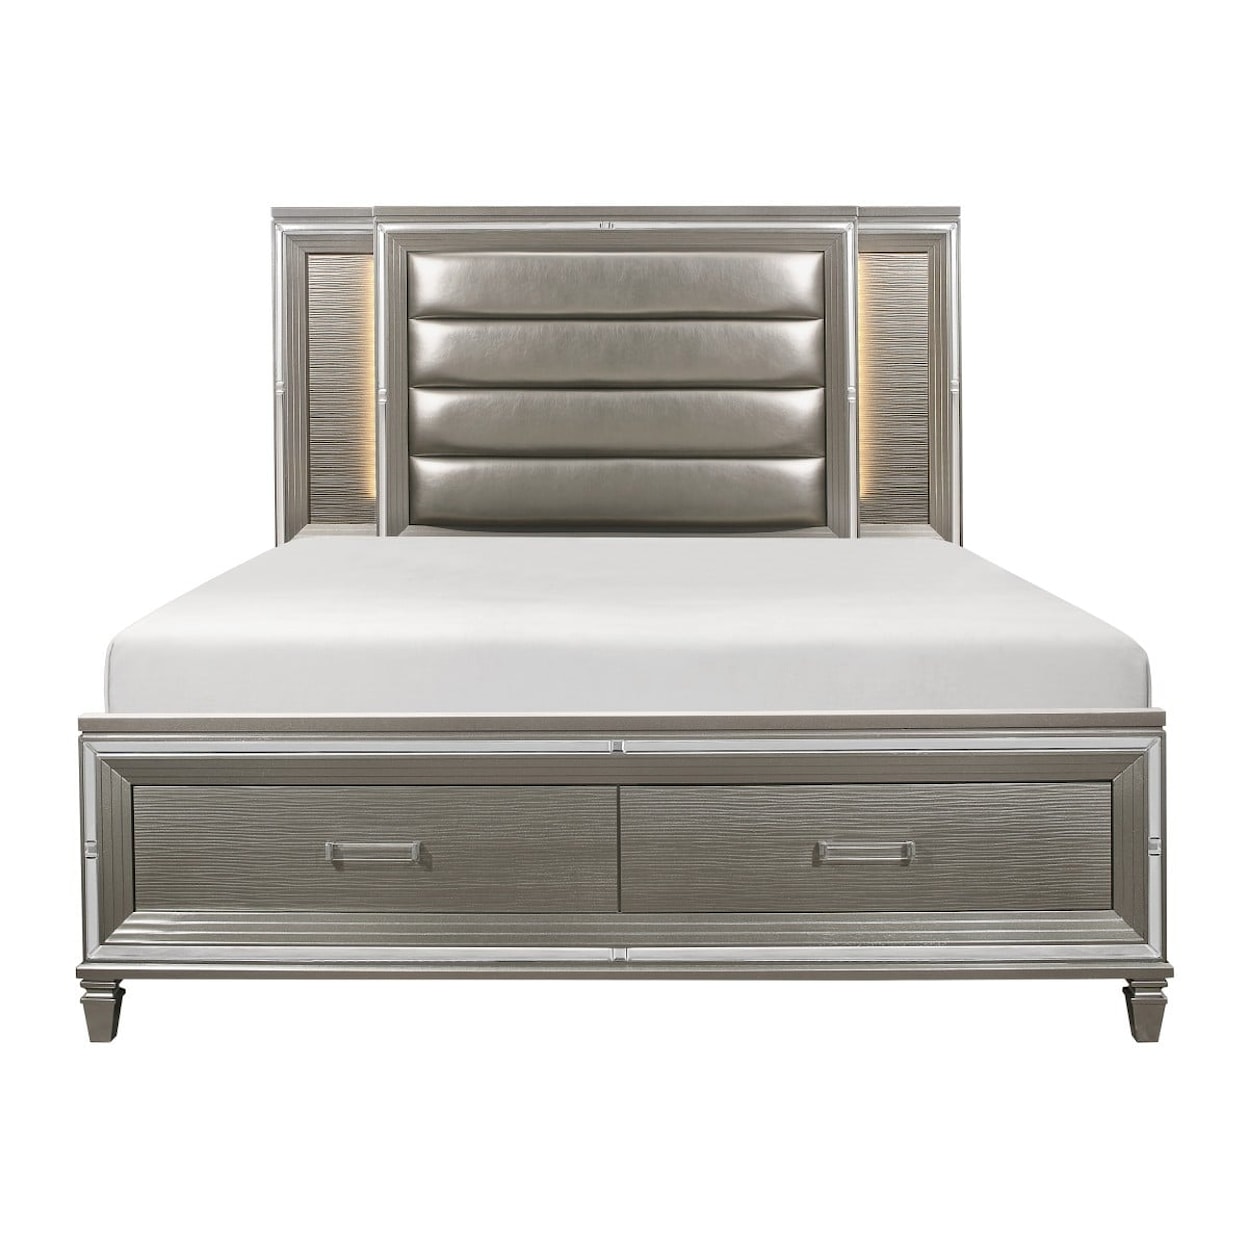 Homelegance Furniture Tamsin Queen Bed